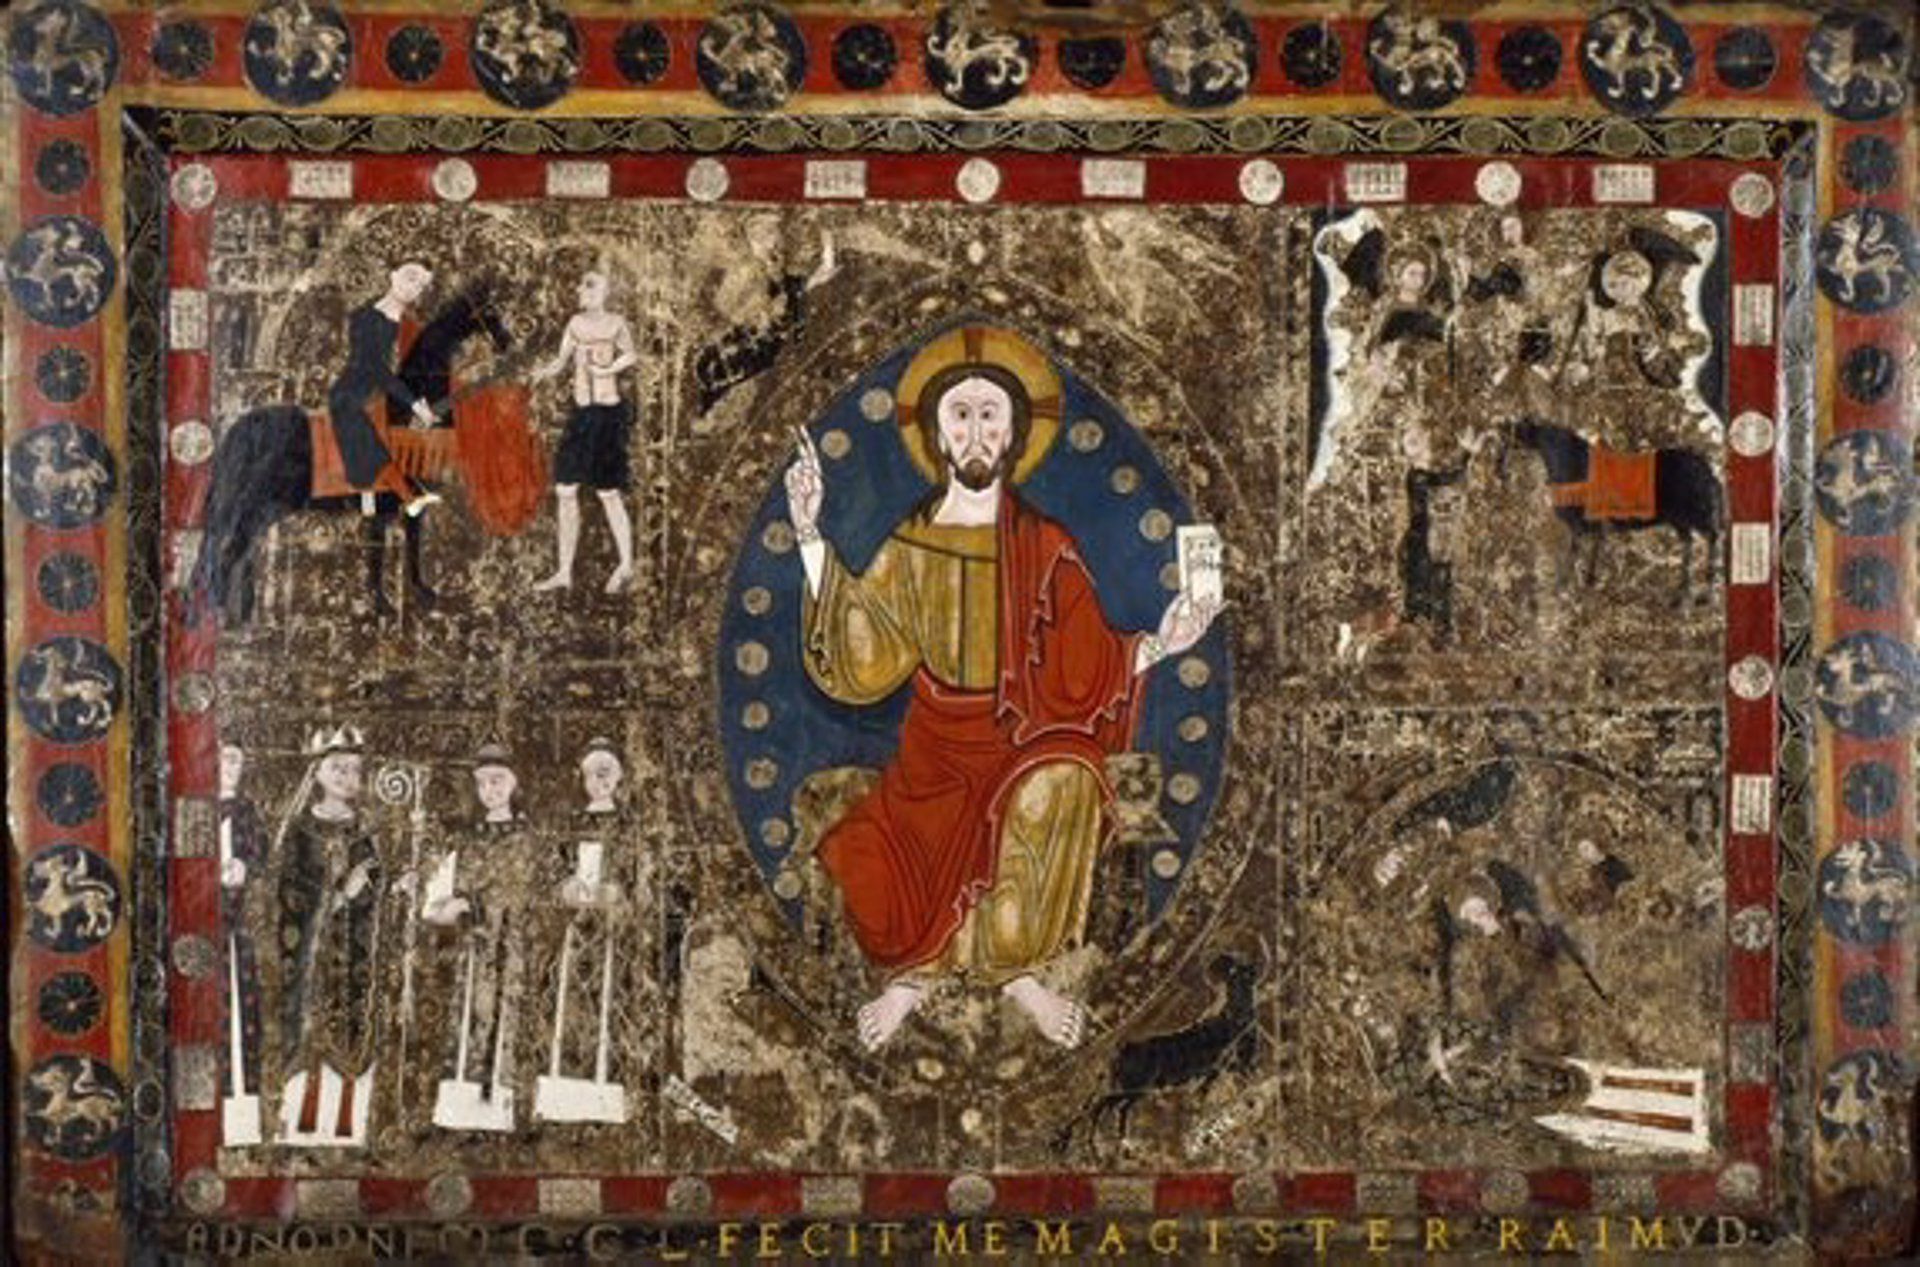 La historia del frontal románico del siglo XIII de una iglesia de Lérida que apareció en EEUU